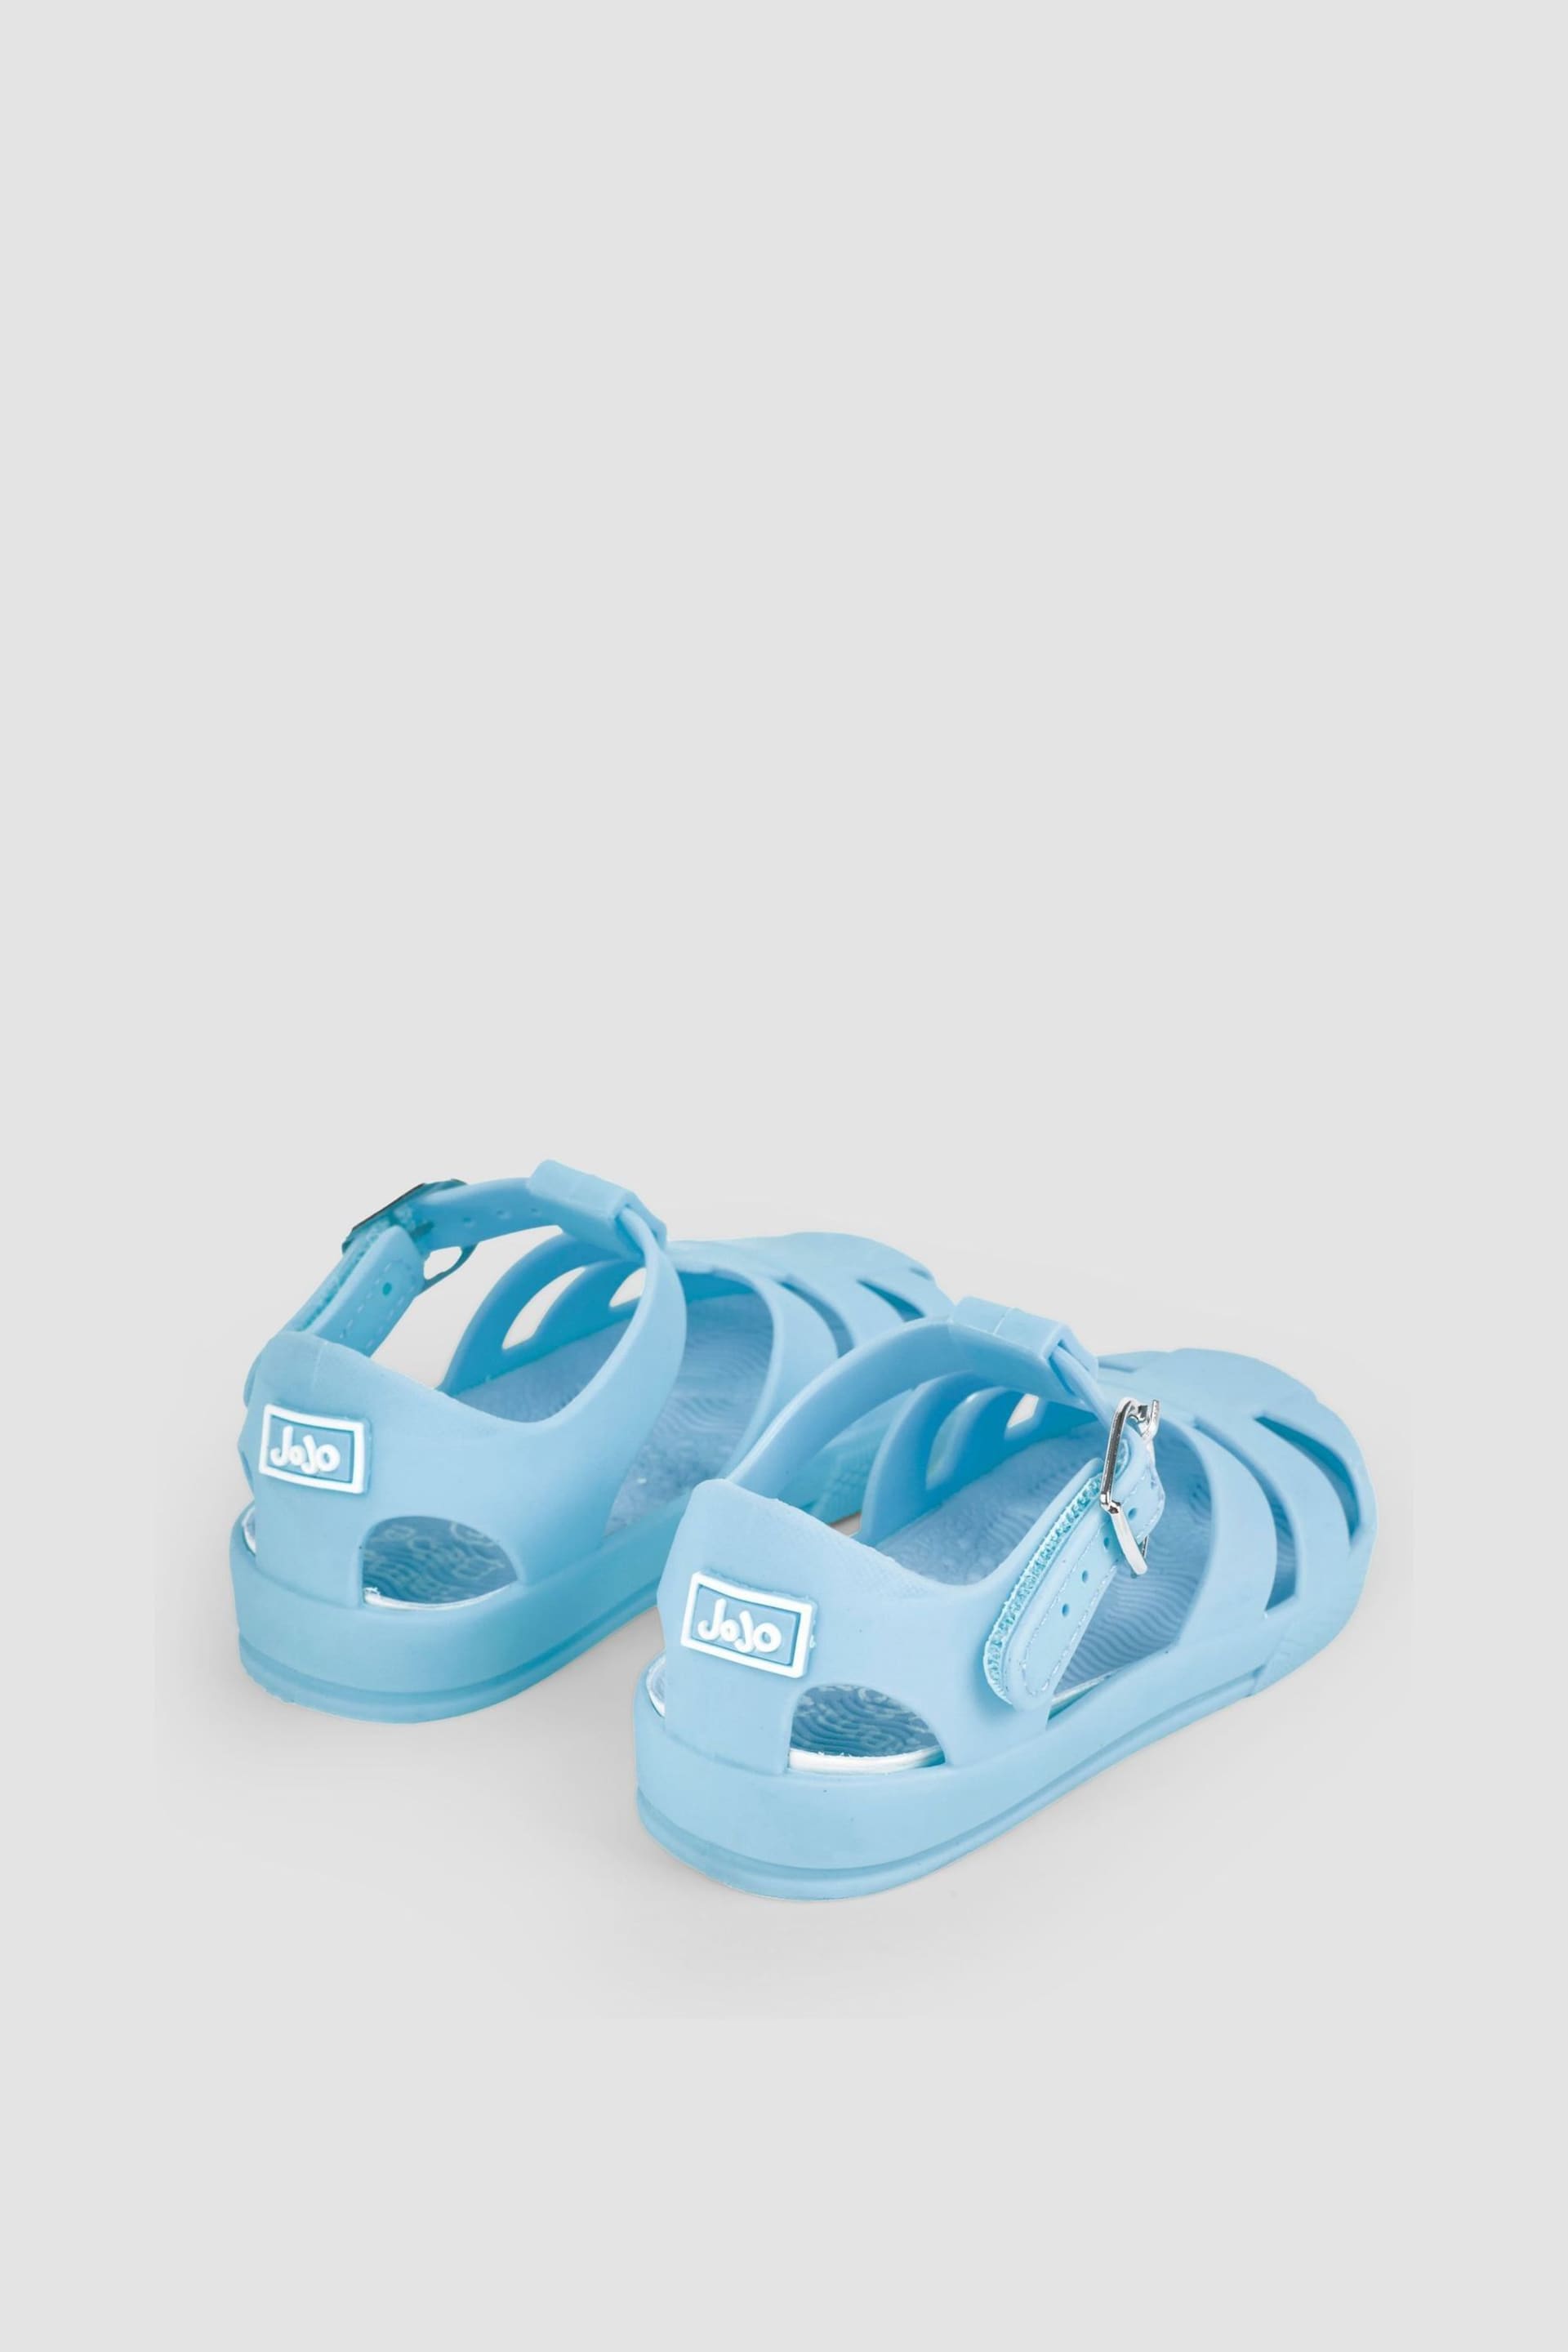 JoJo Maman Bébé Blue Jelly Sandals - Image 2 of 6